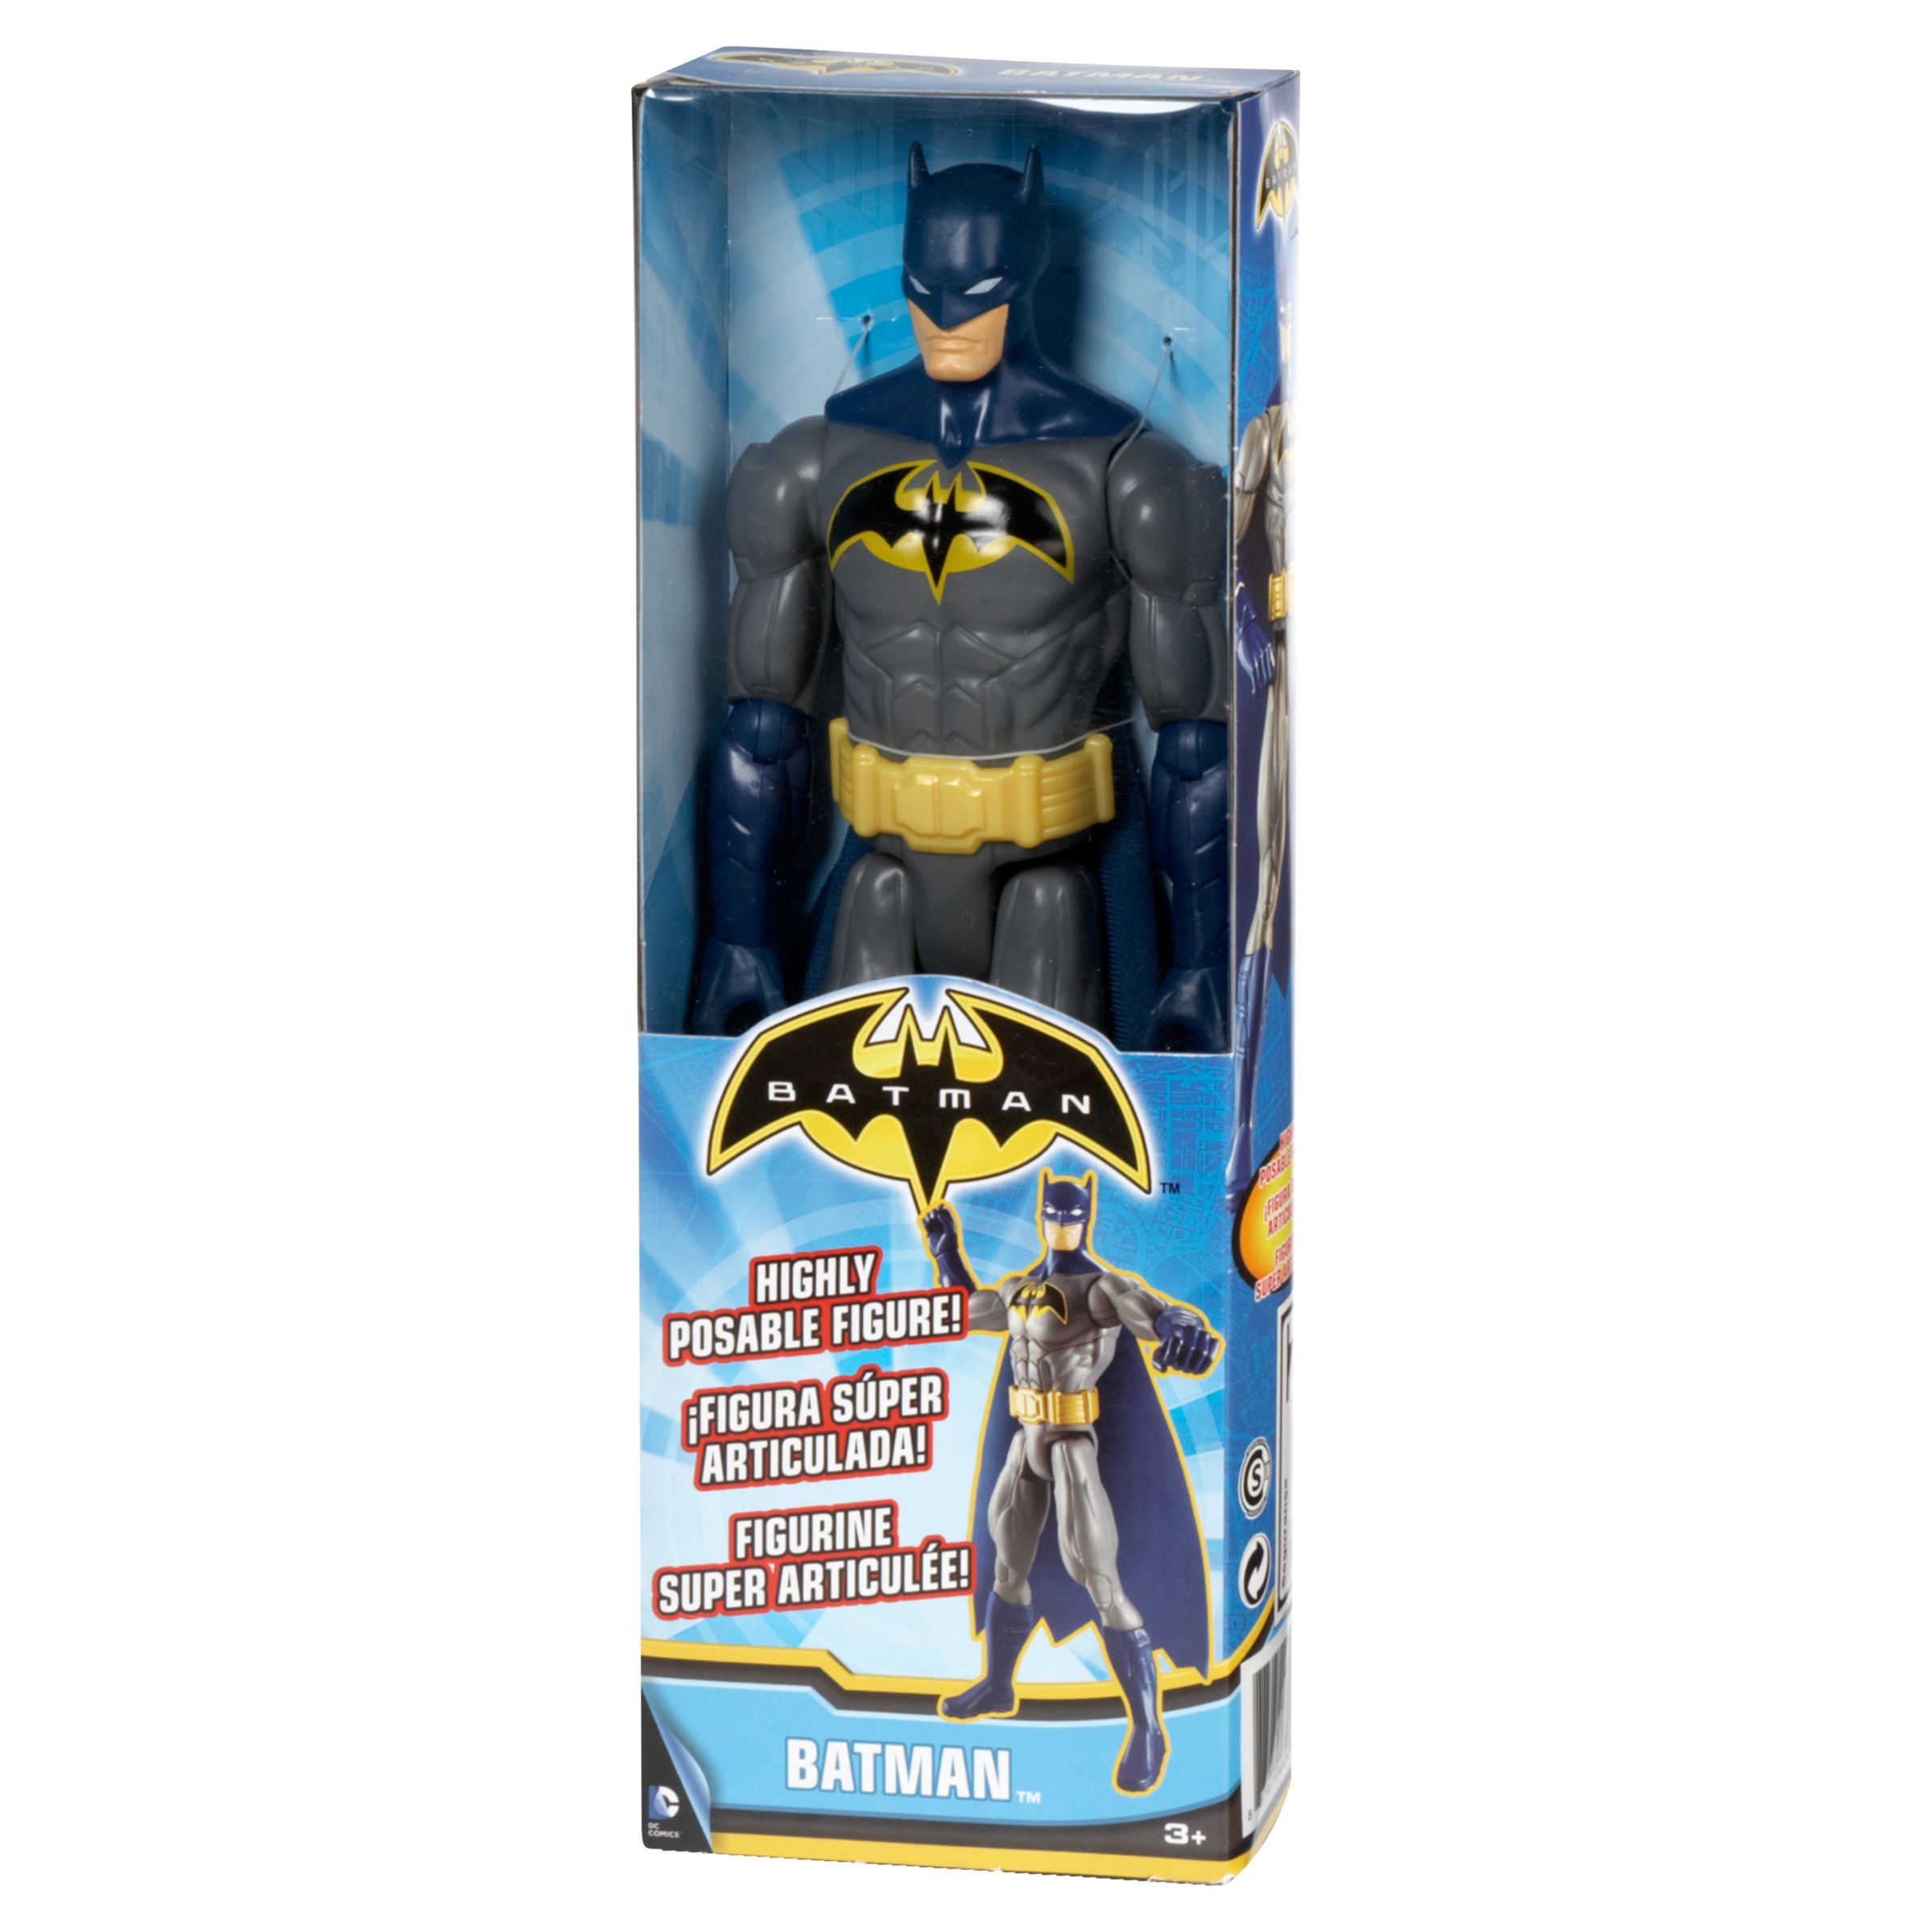 30cm batman figure